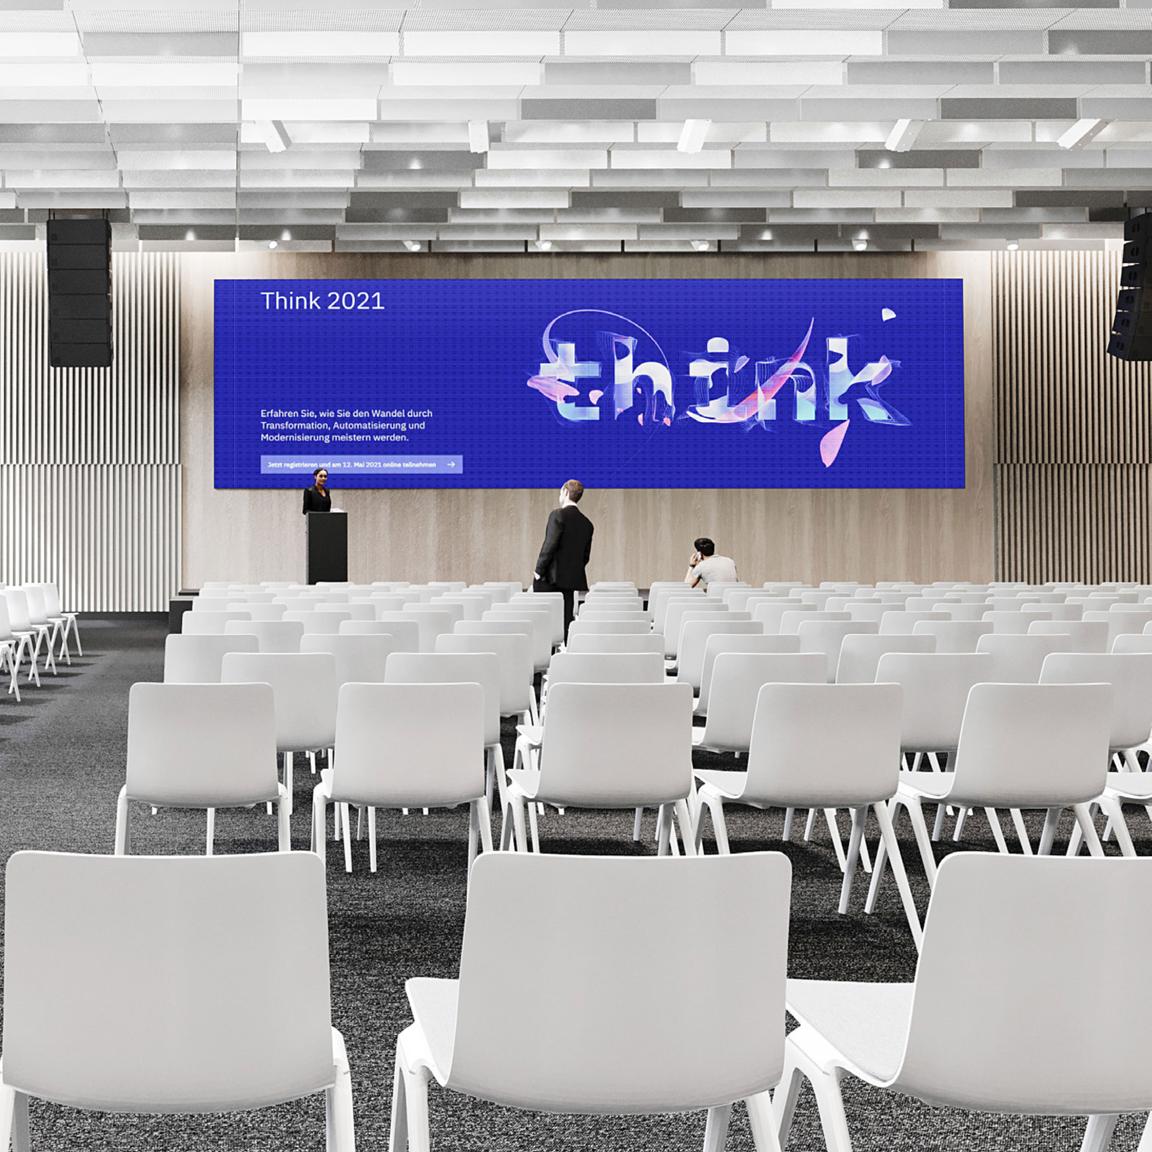 conference room with digital display behind speaker podium